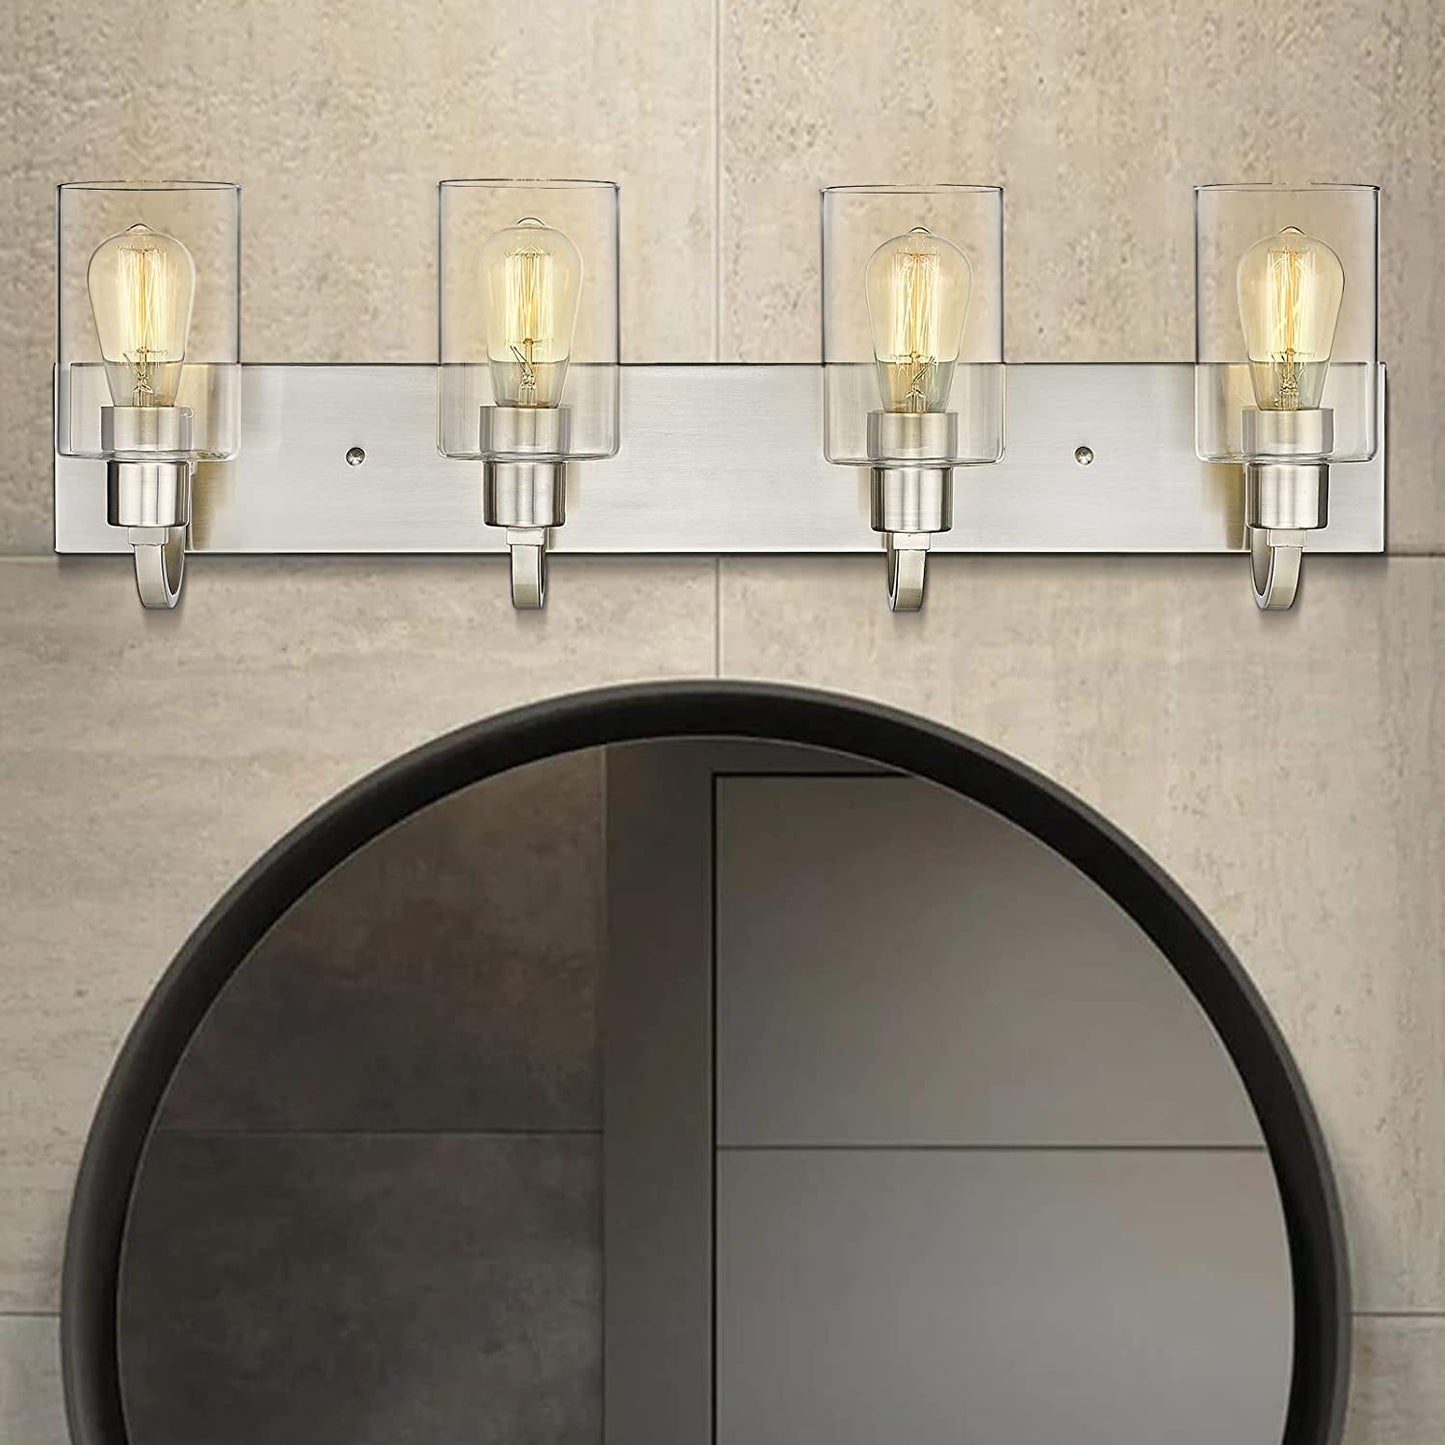 
                  
                    Emliviar 4-Light Vanity Light Fixture - Modern Bathroom Lighting Fixture, Brushed Nickel Finish with Clear Glass,YCE237B-4W BN
                  
                